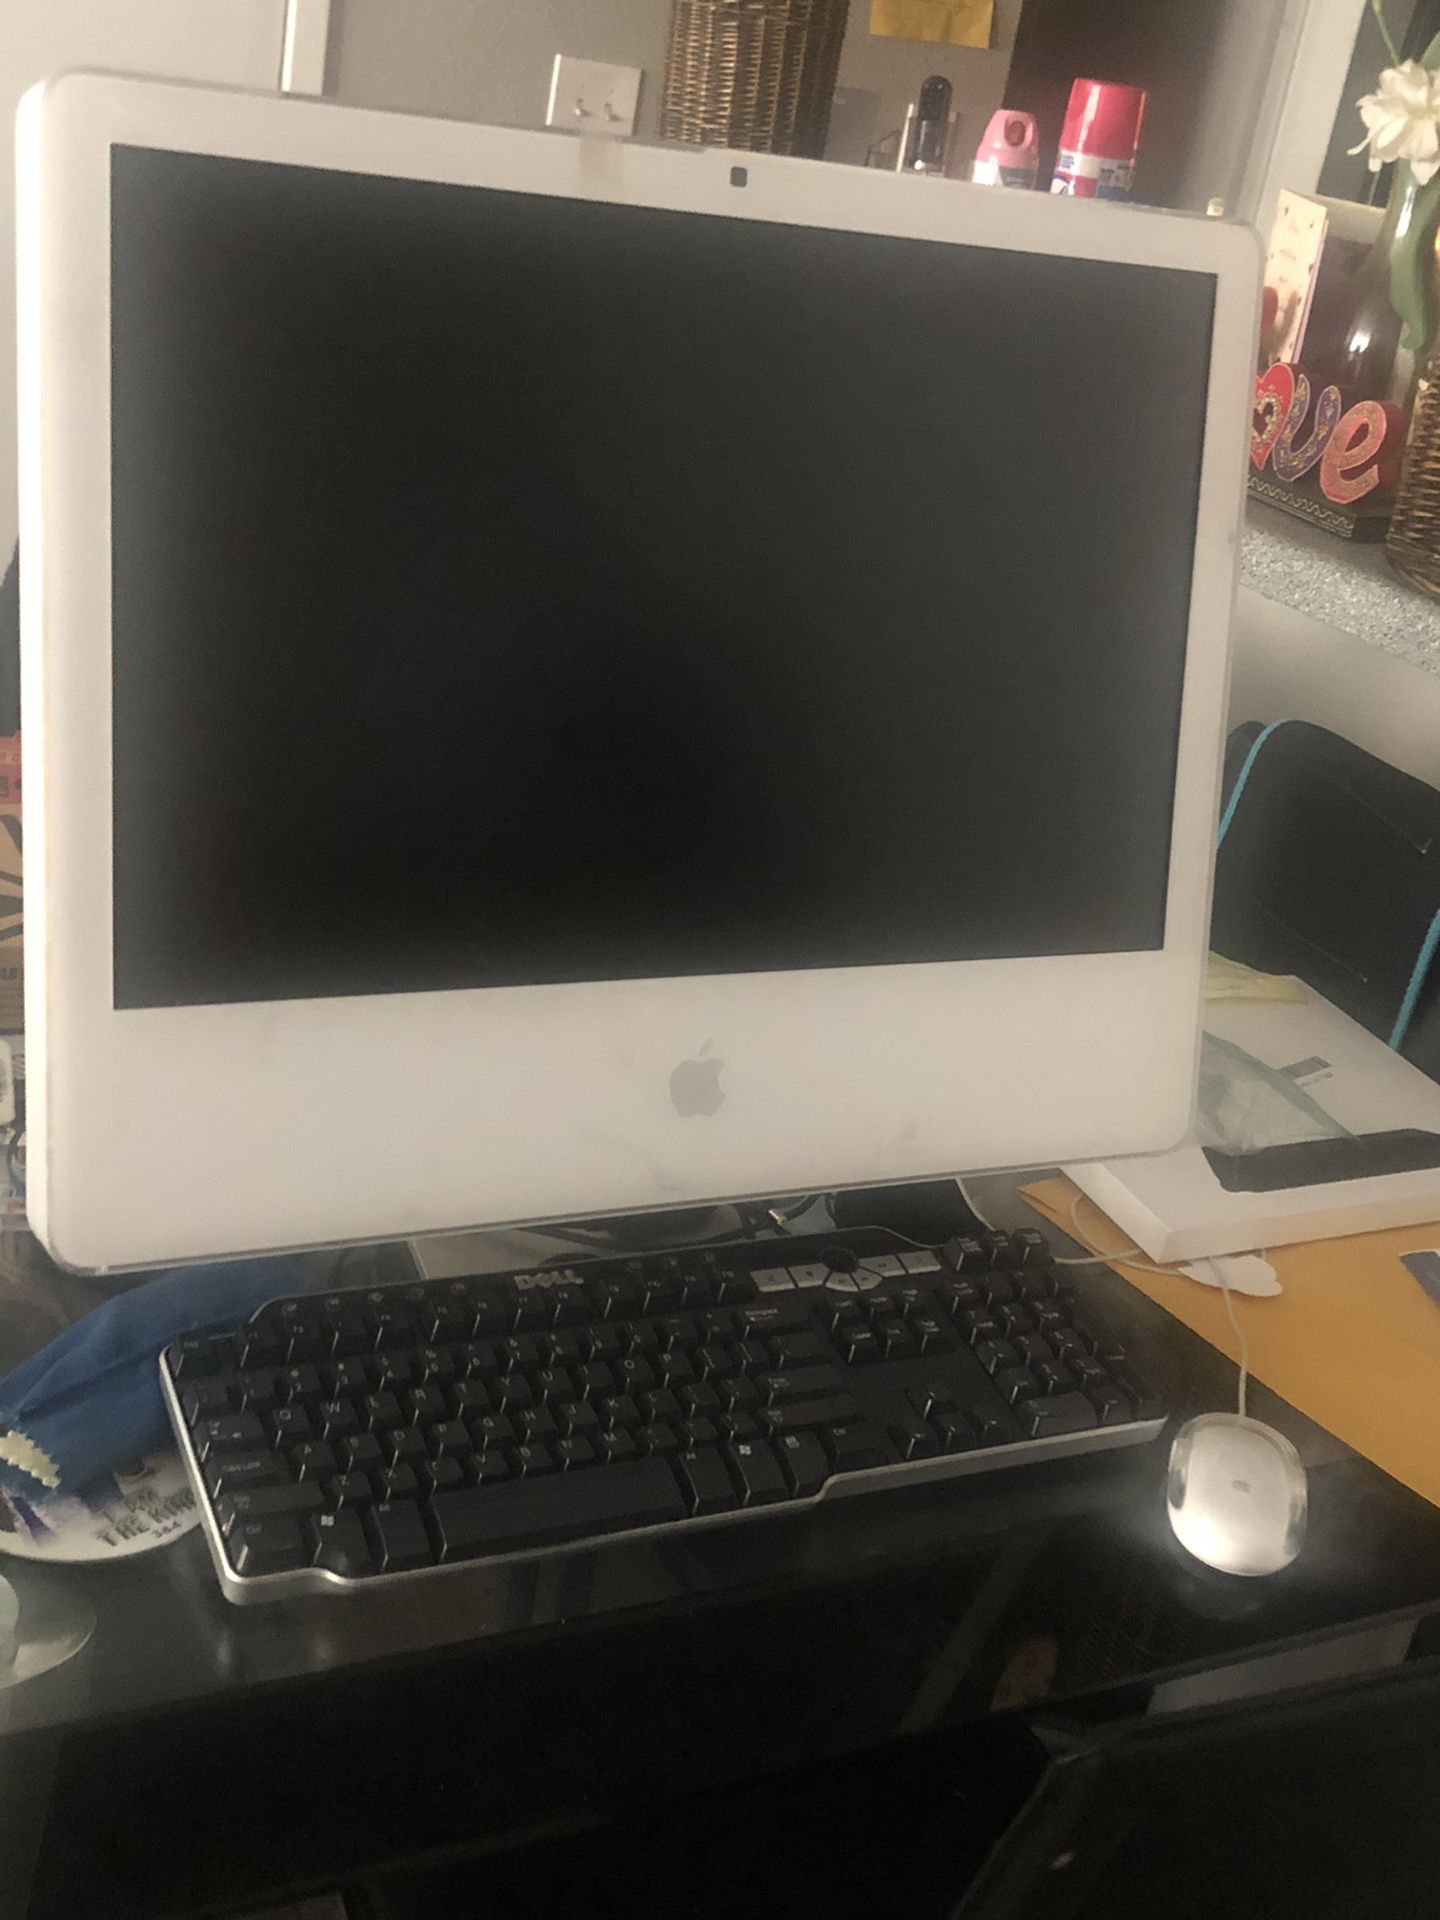 Apple computer